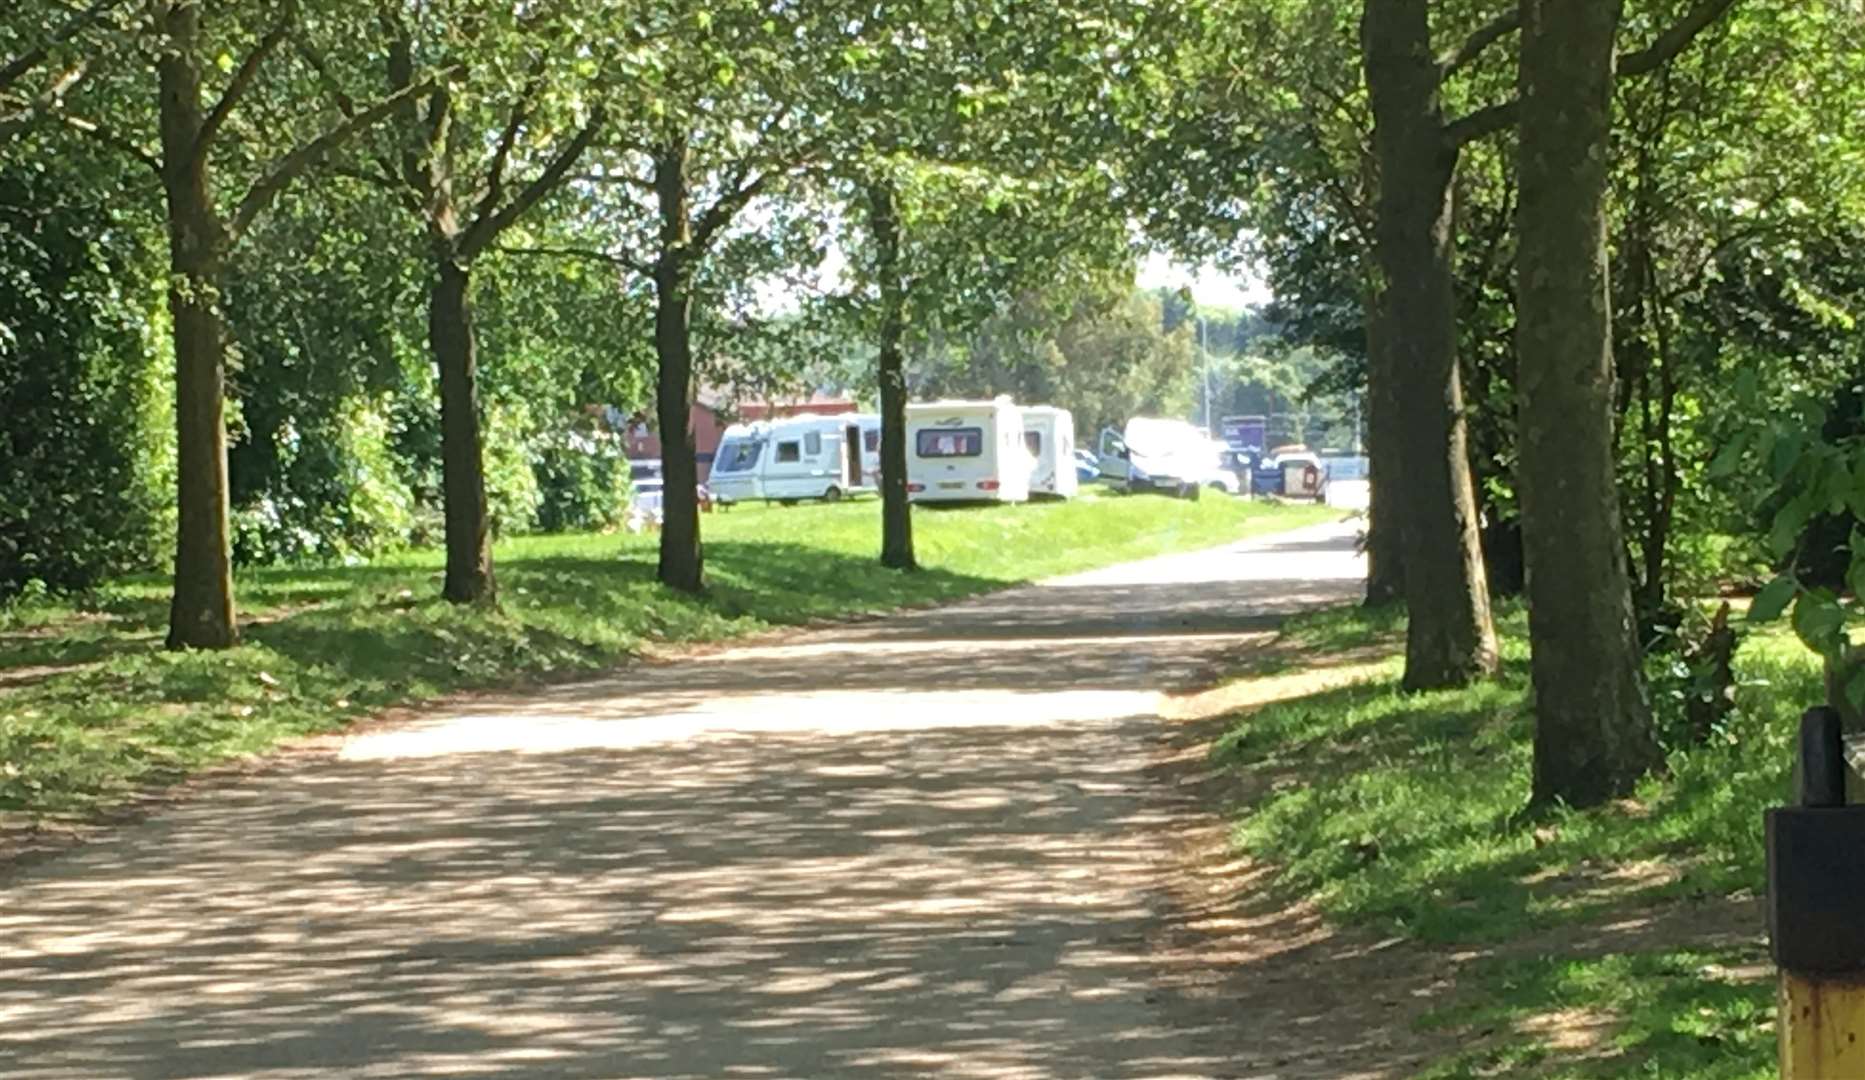 Caravans have set up at Aylesford Bulls RFC off Hall Road